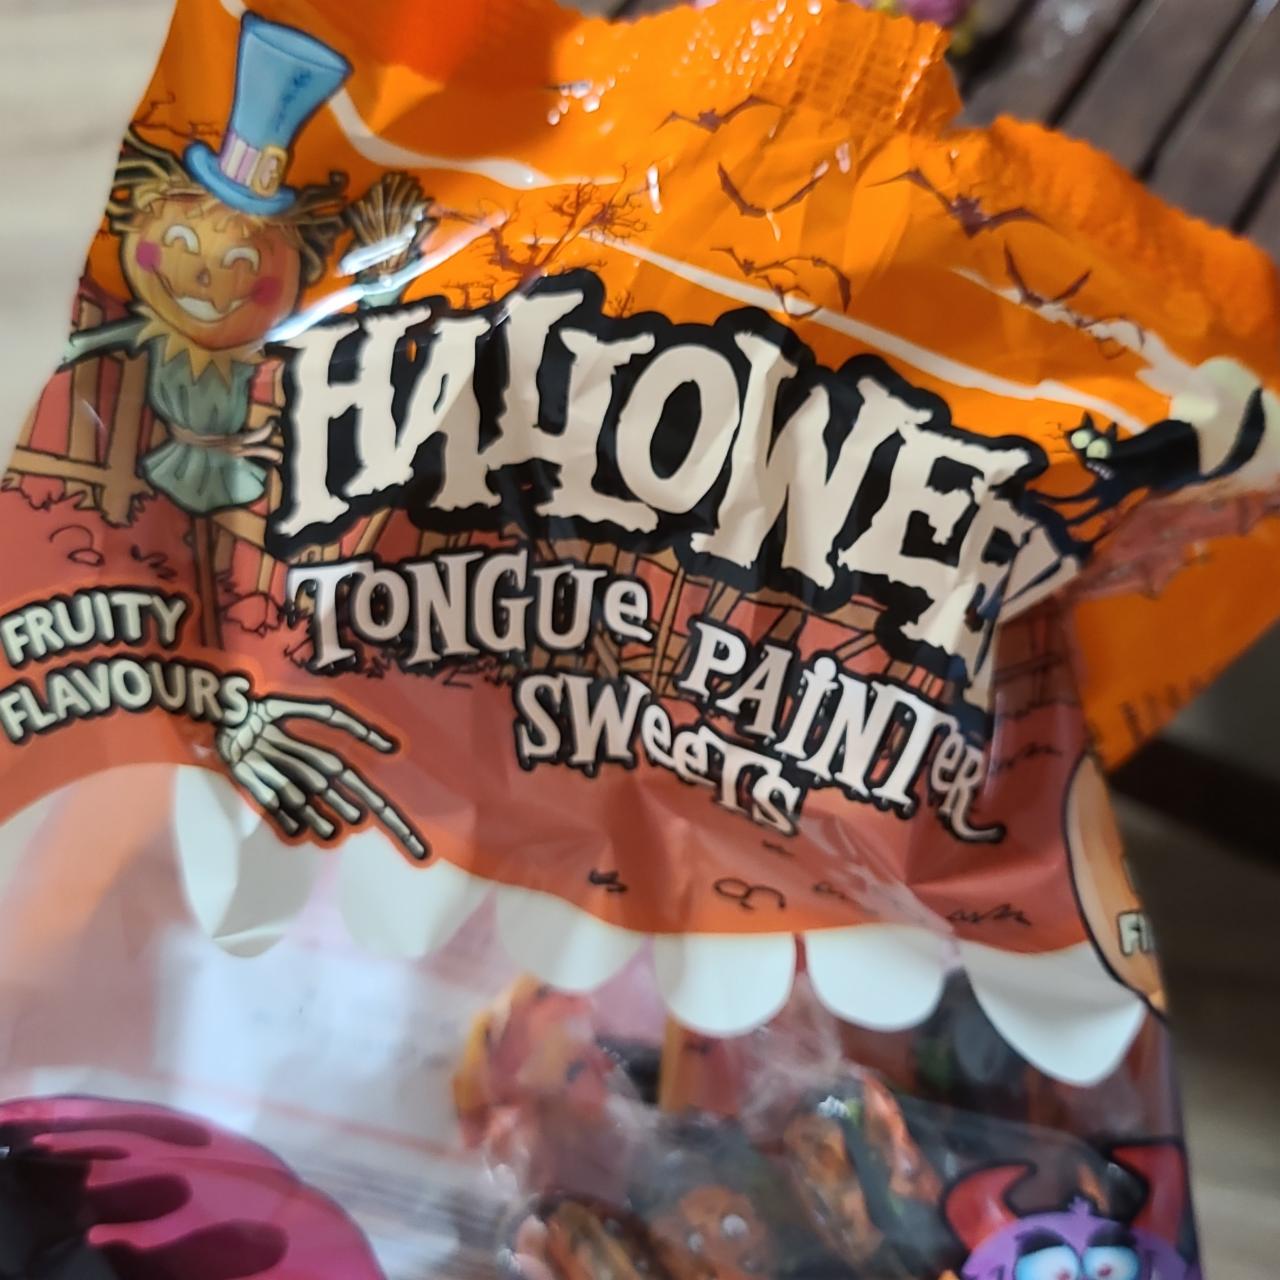 Képek - Halloween tounge painter sweets